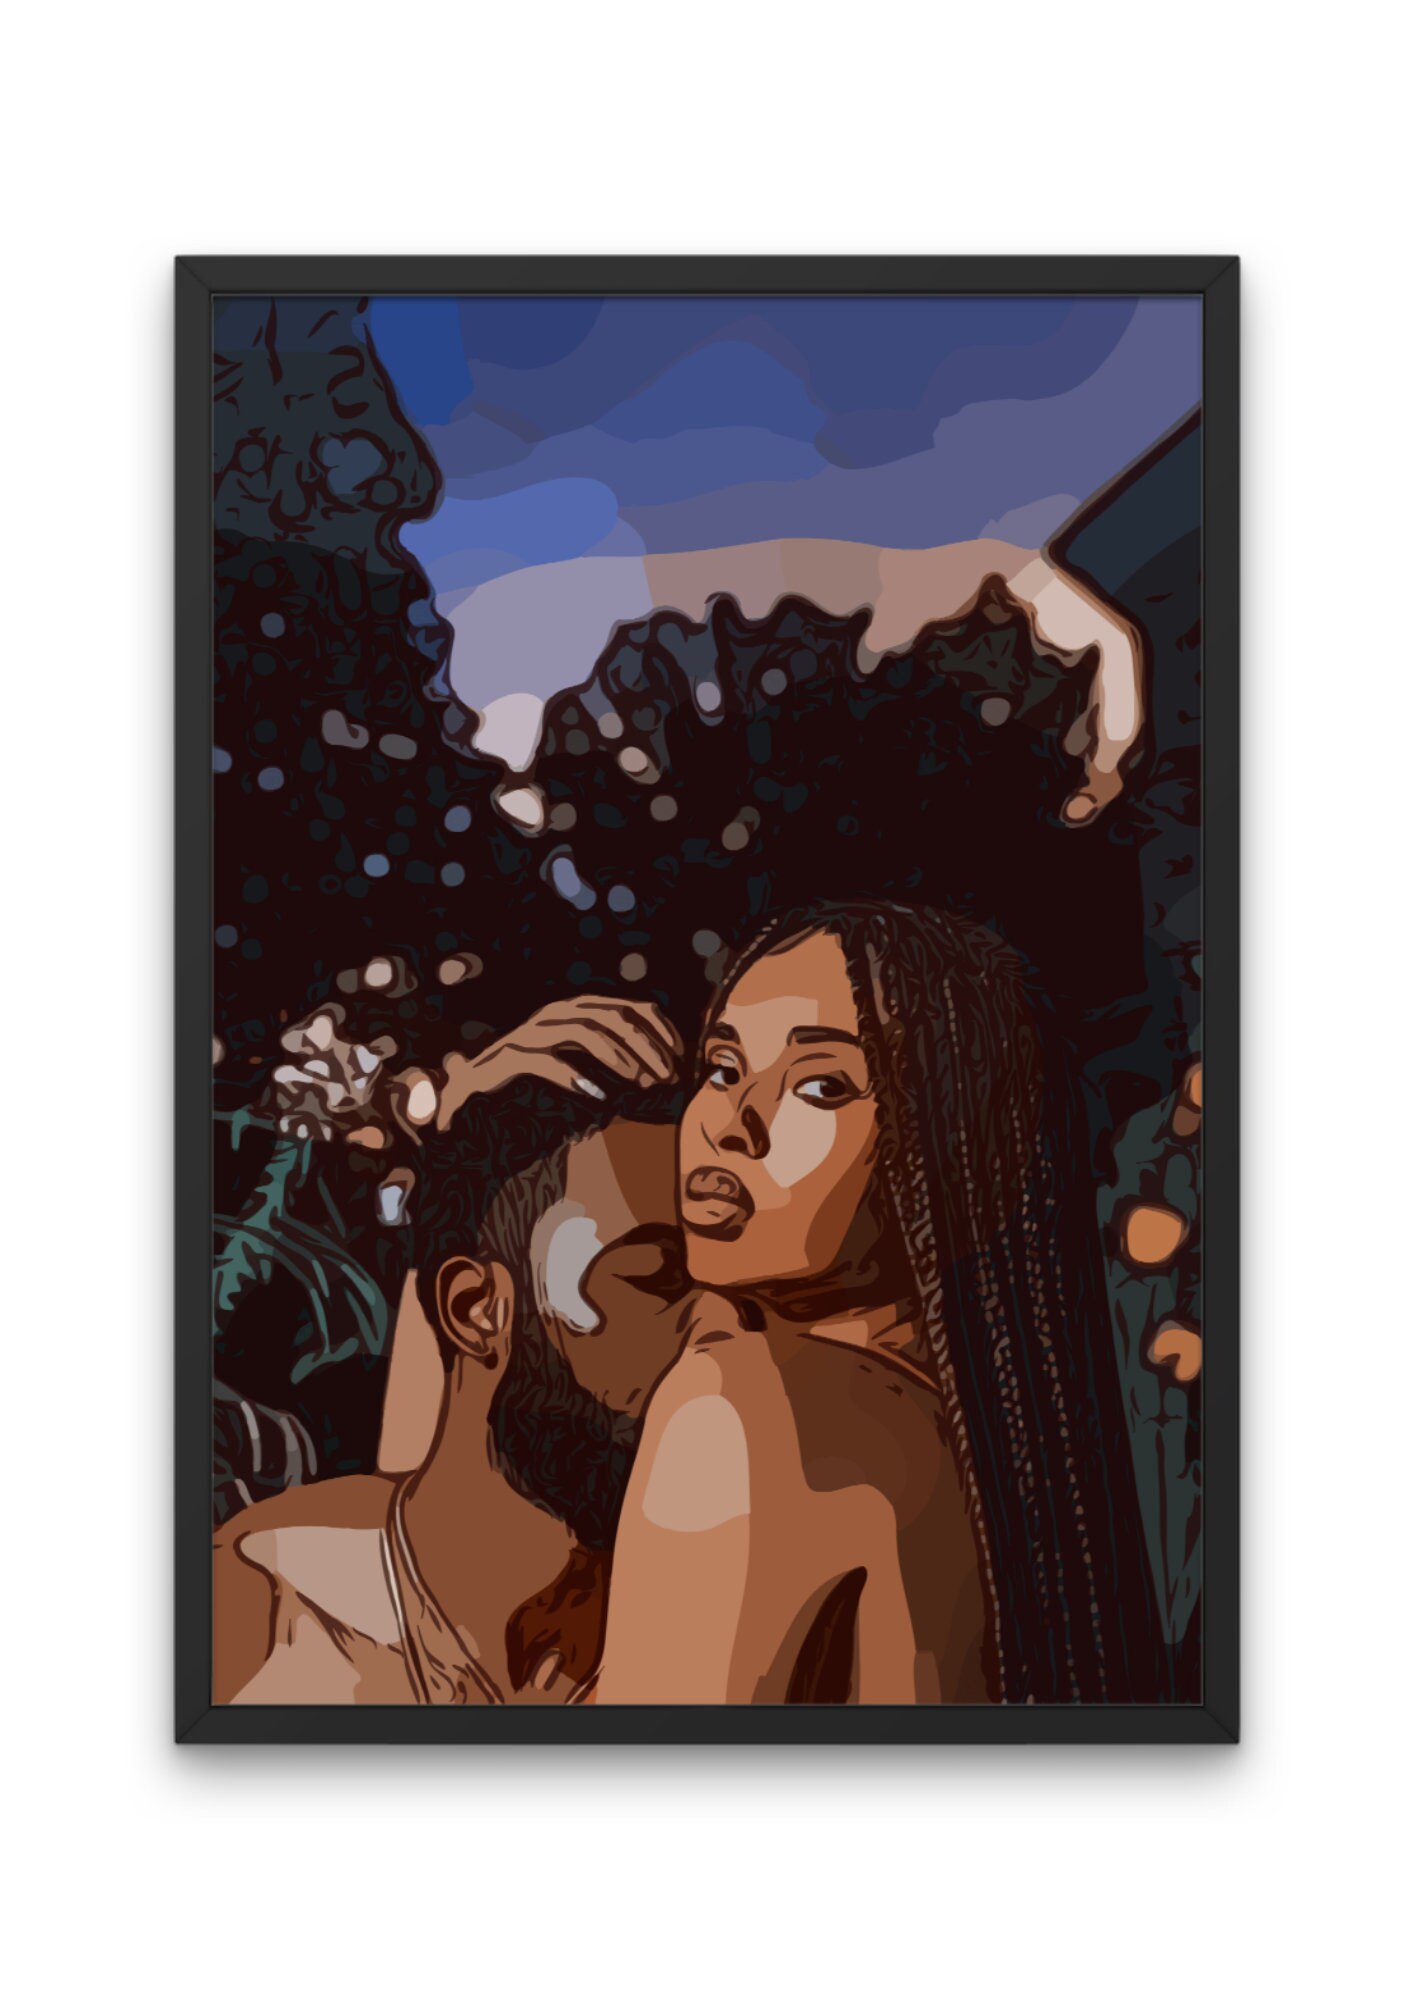 Framed Art by Black Artists (A4 Size)